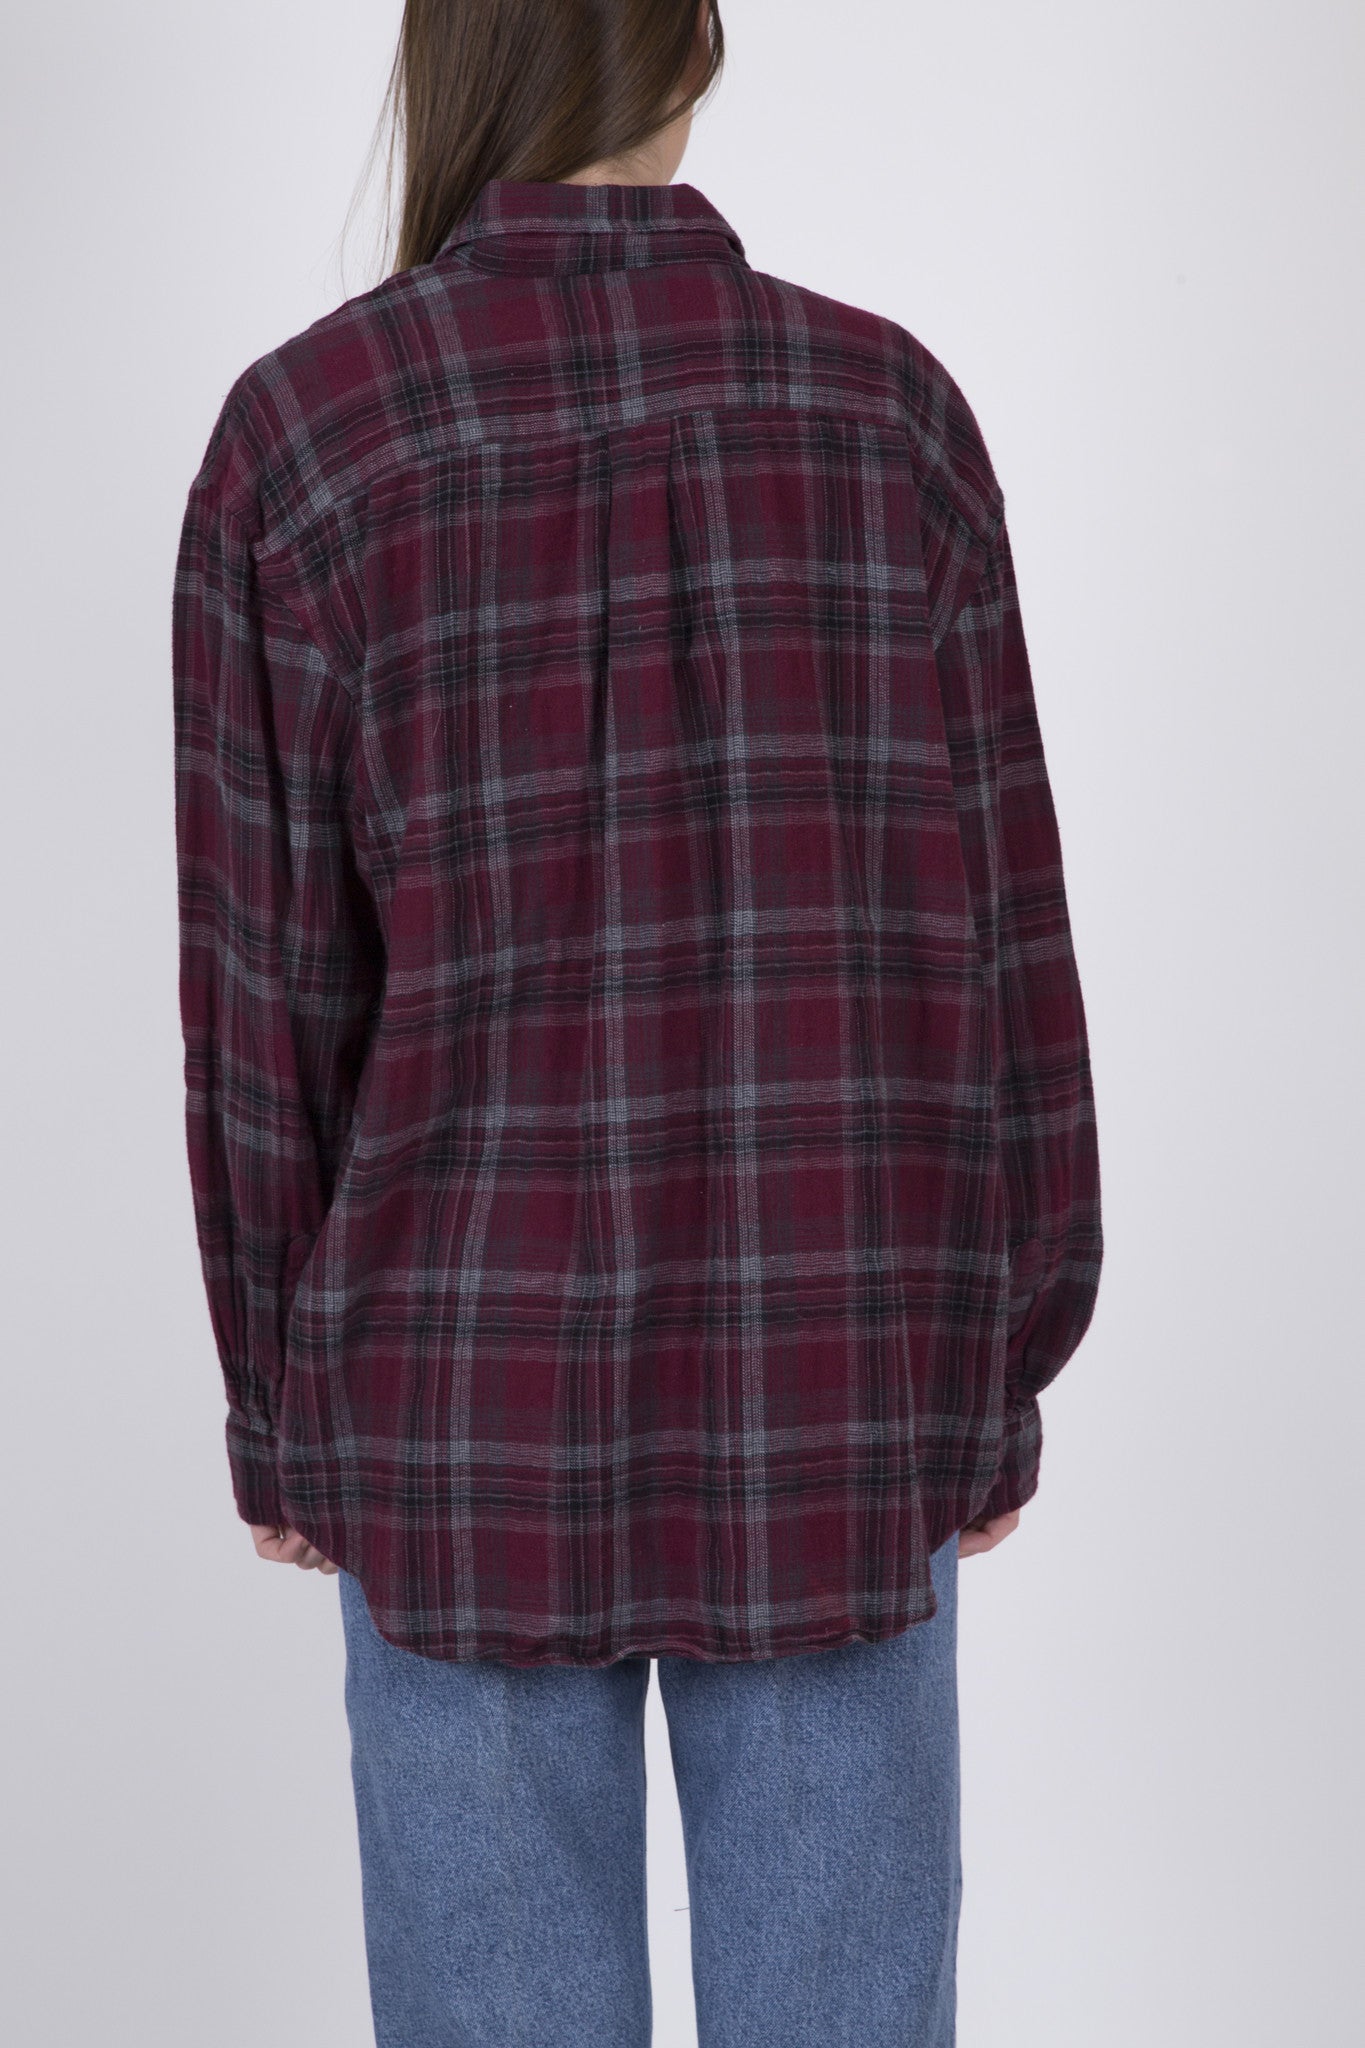 Teen Spirit Plaid Oversized Flannel: Size XL